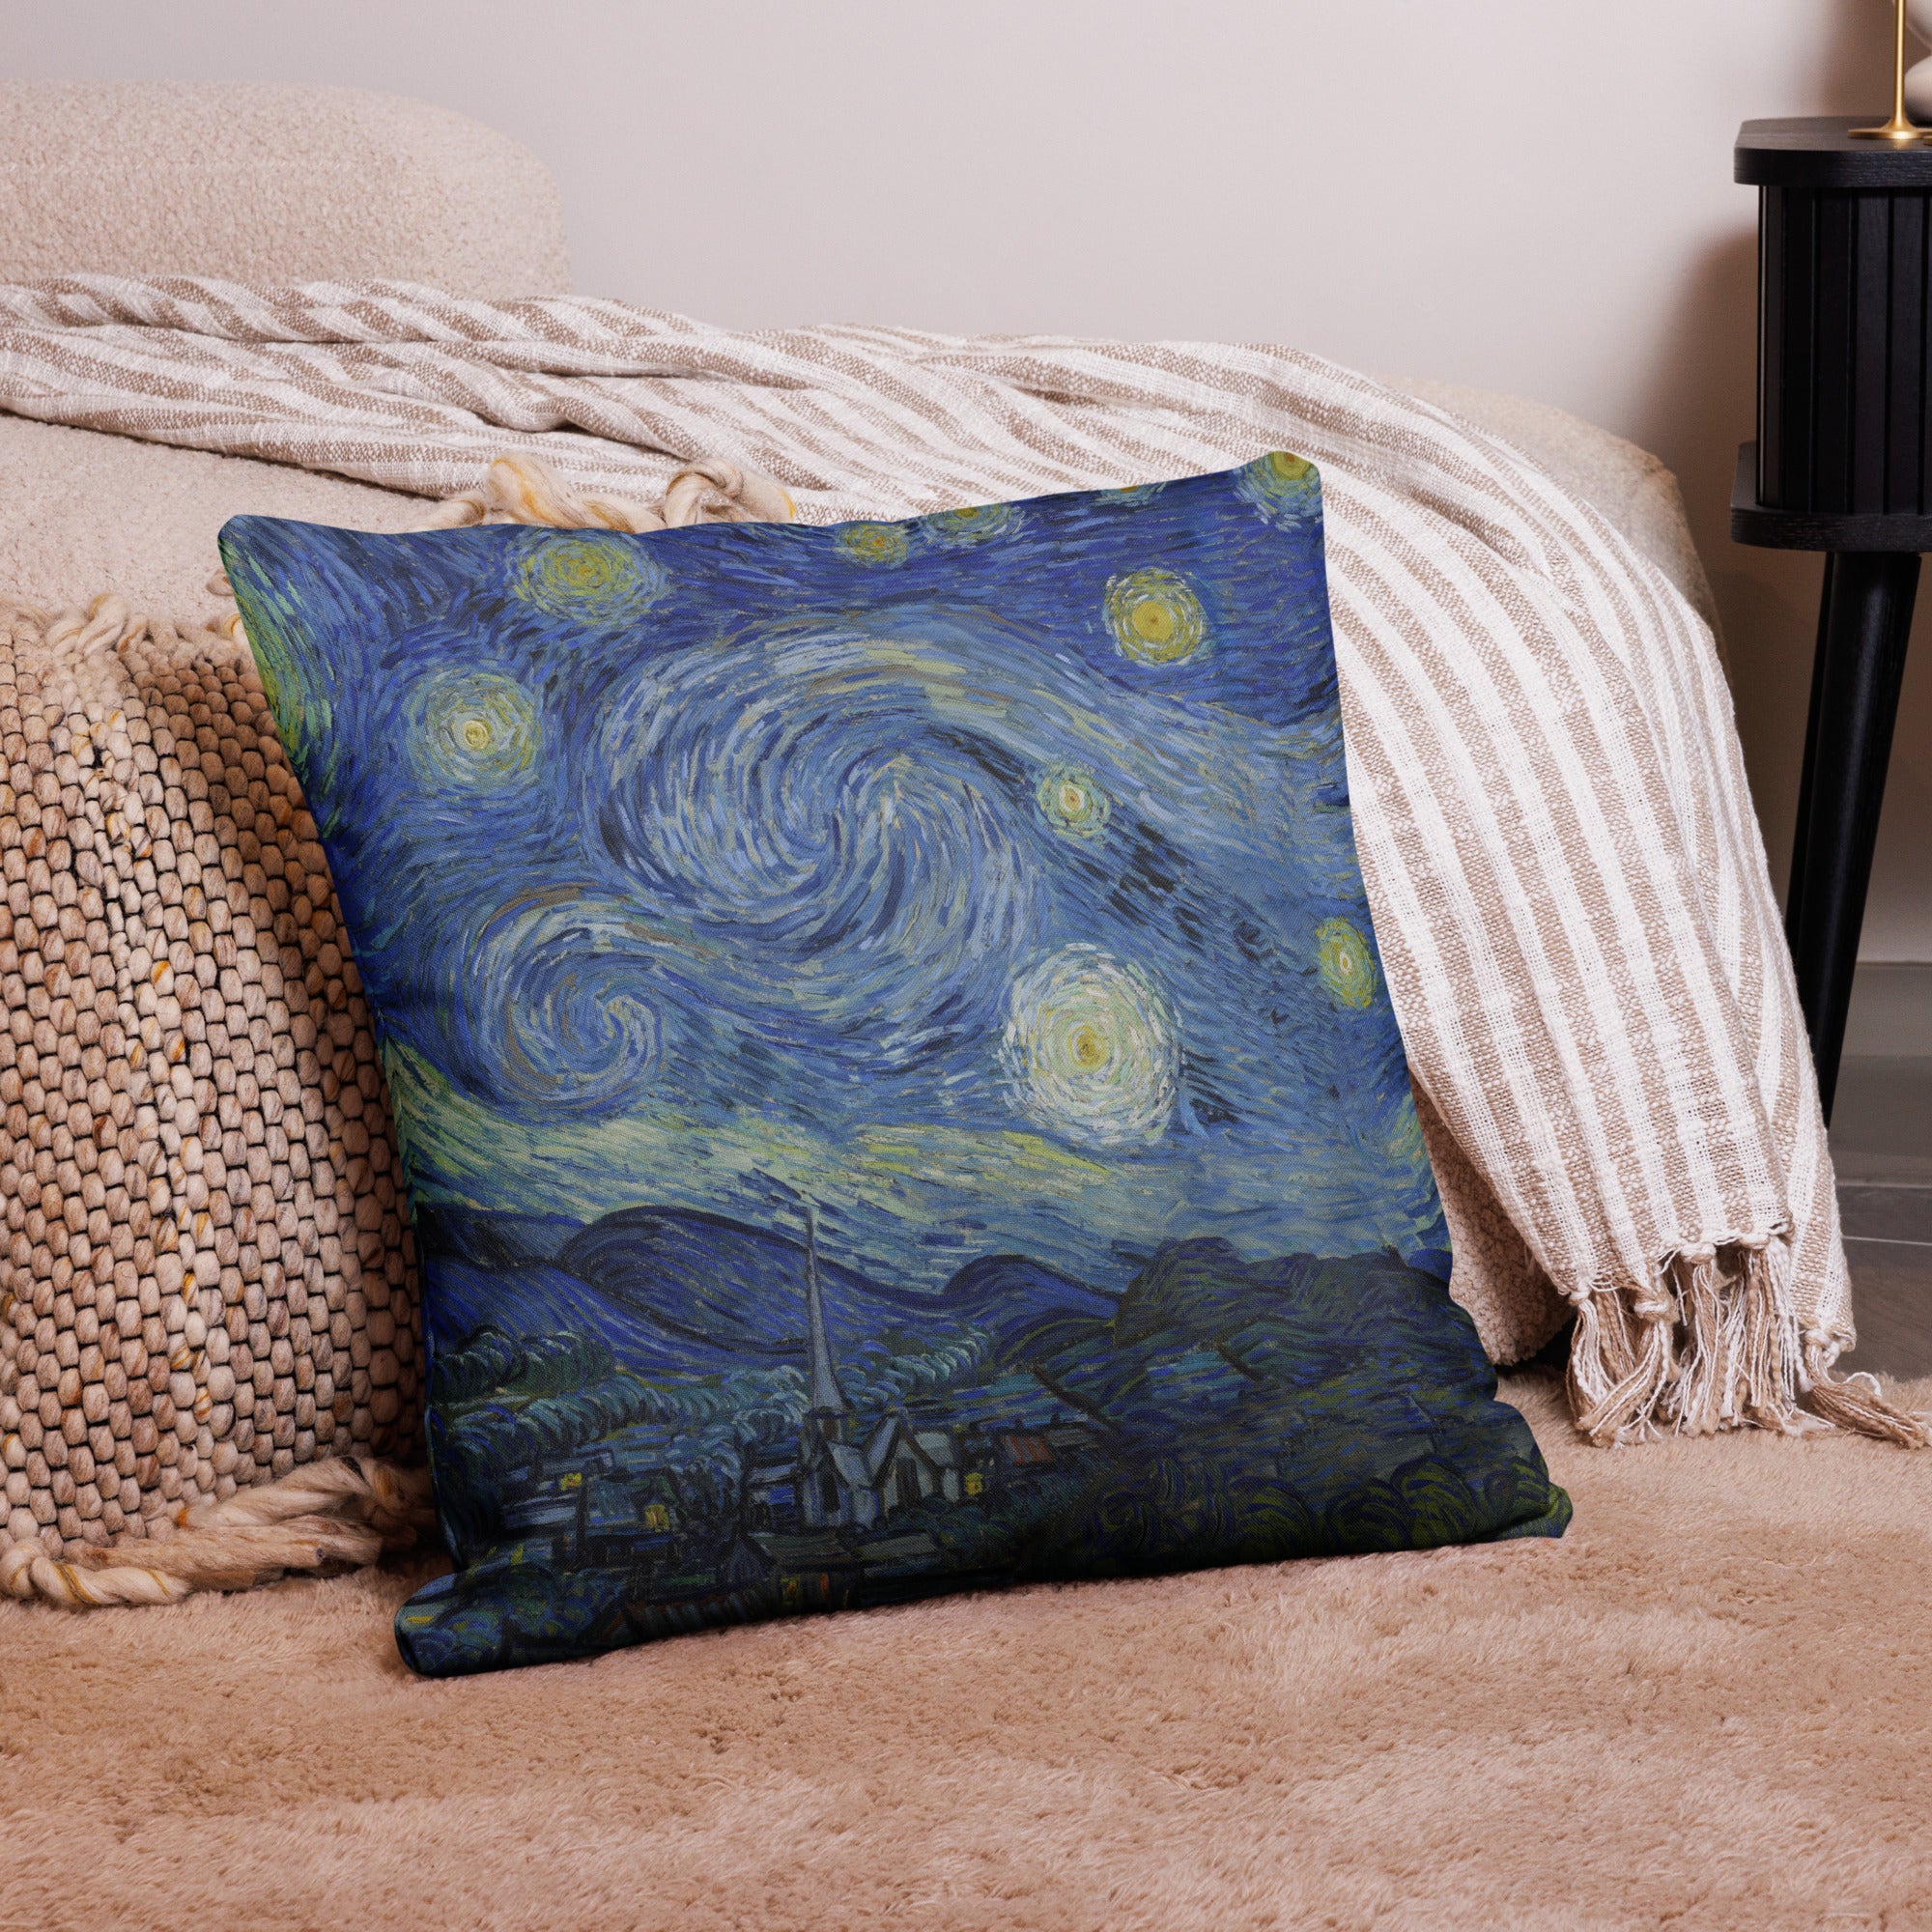 Vincent van Gogh 'Starry Night' Famous Painting Premium Pillow | Premium Art Cushion